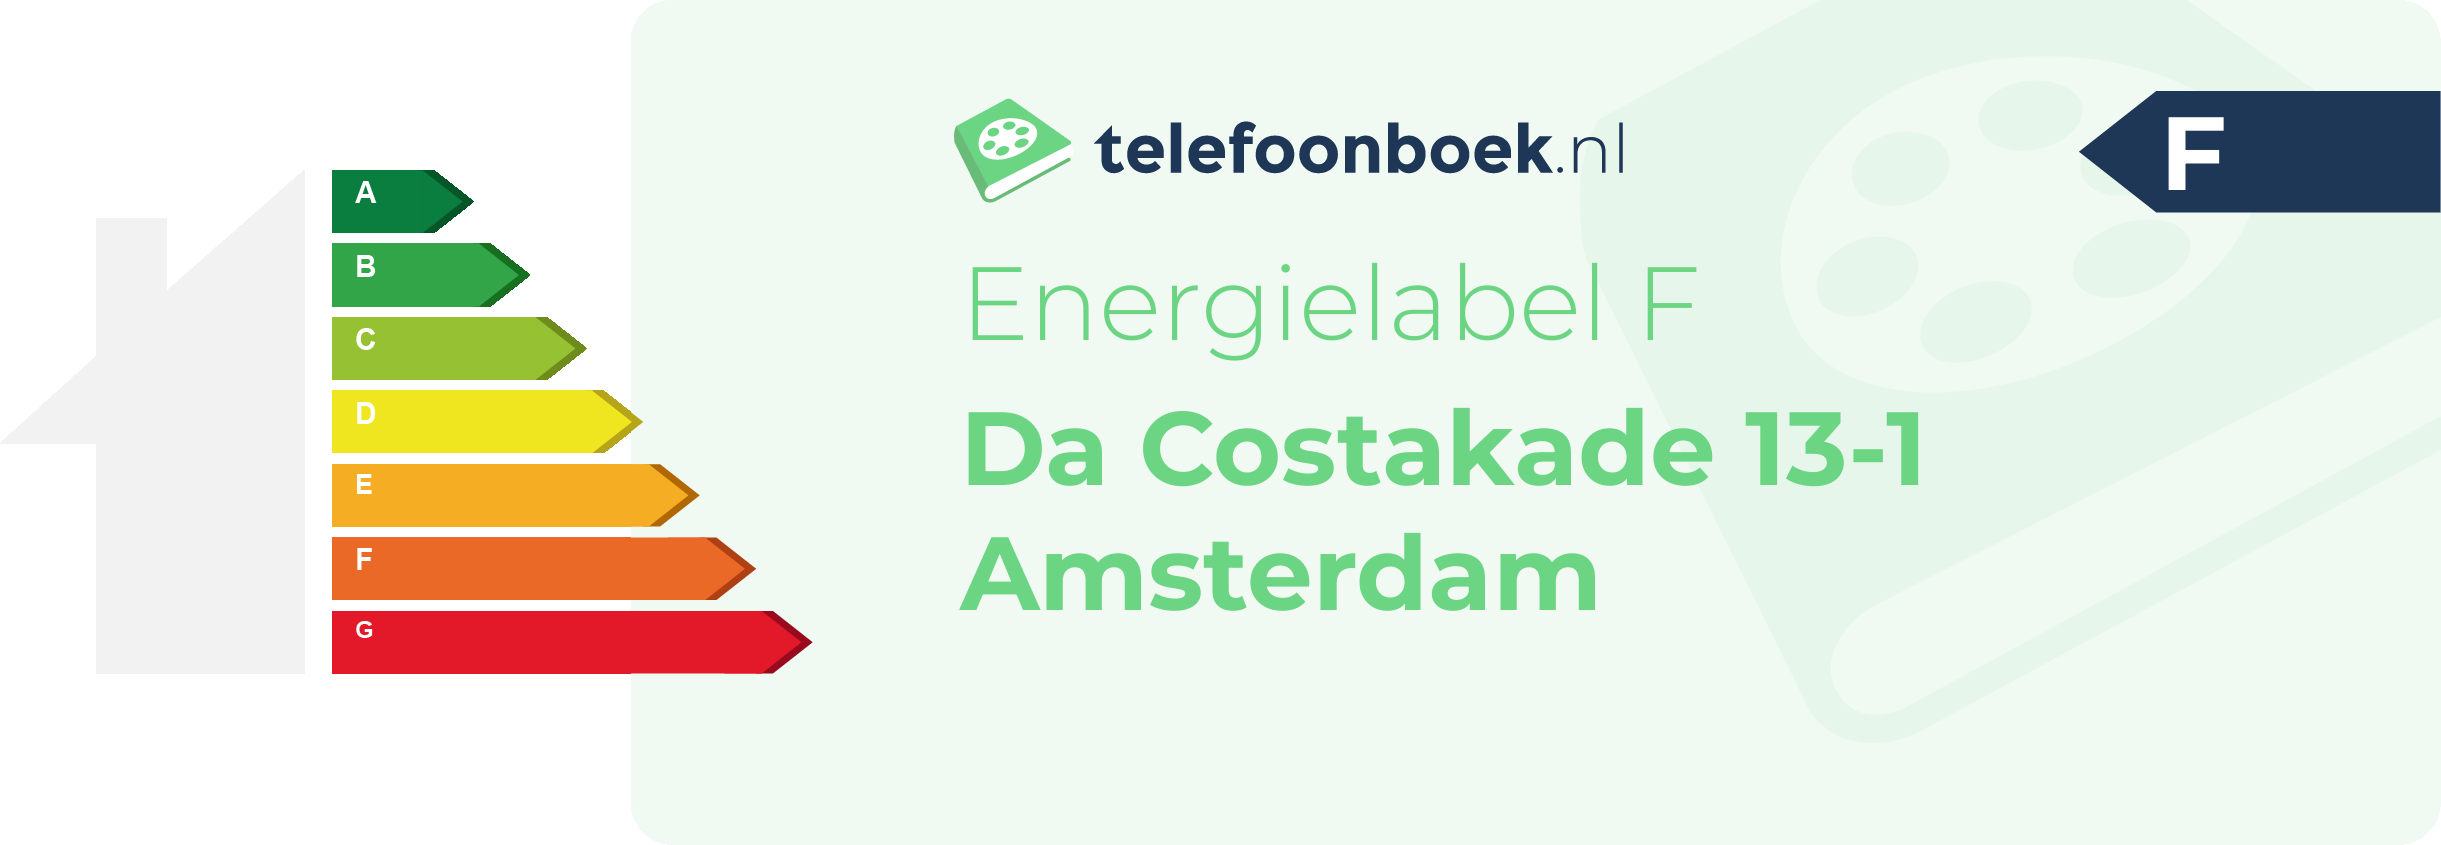 Energielabel Da Costakade 13-1 Amsterdam